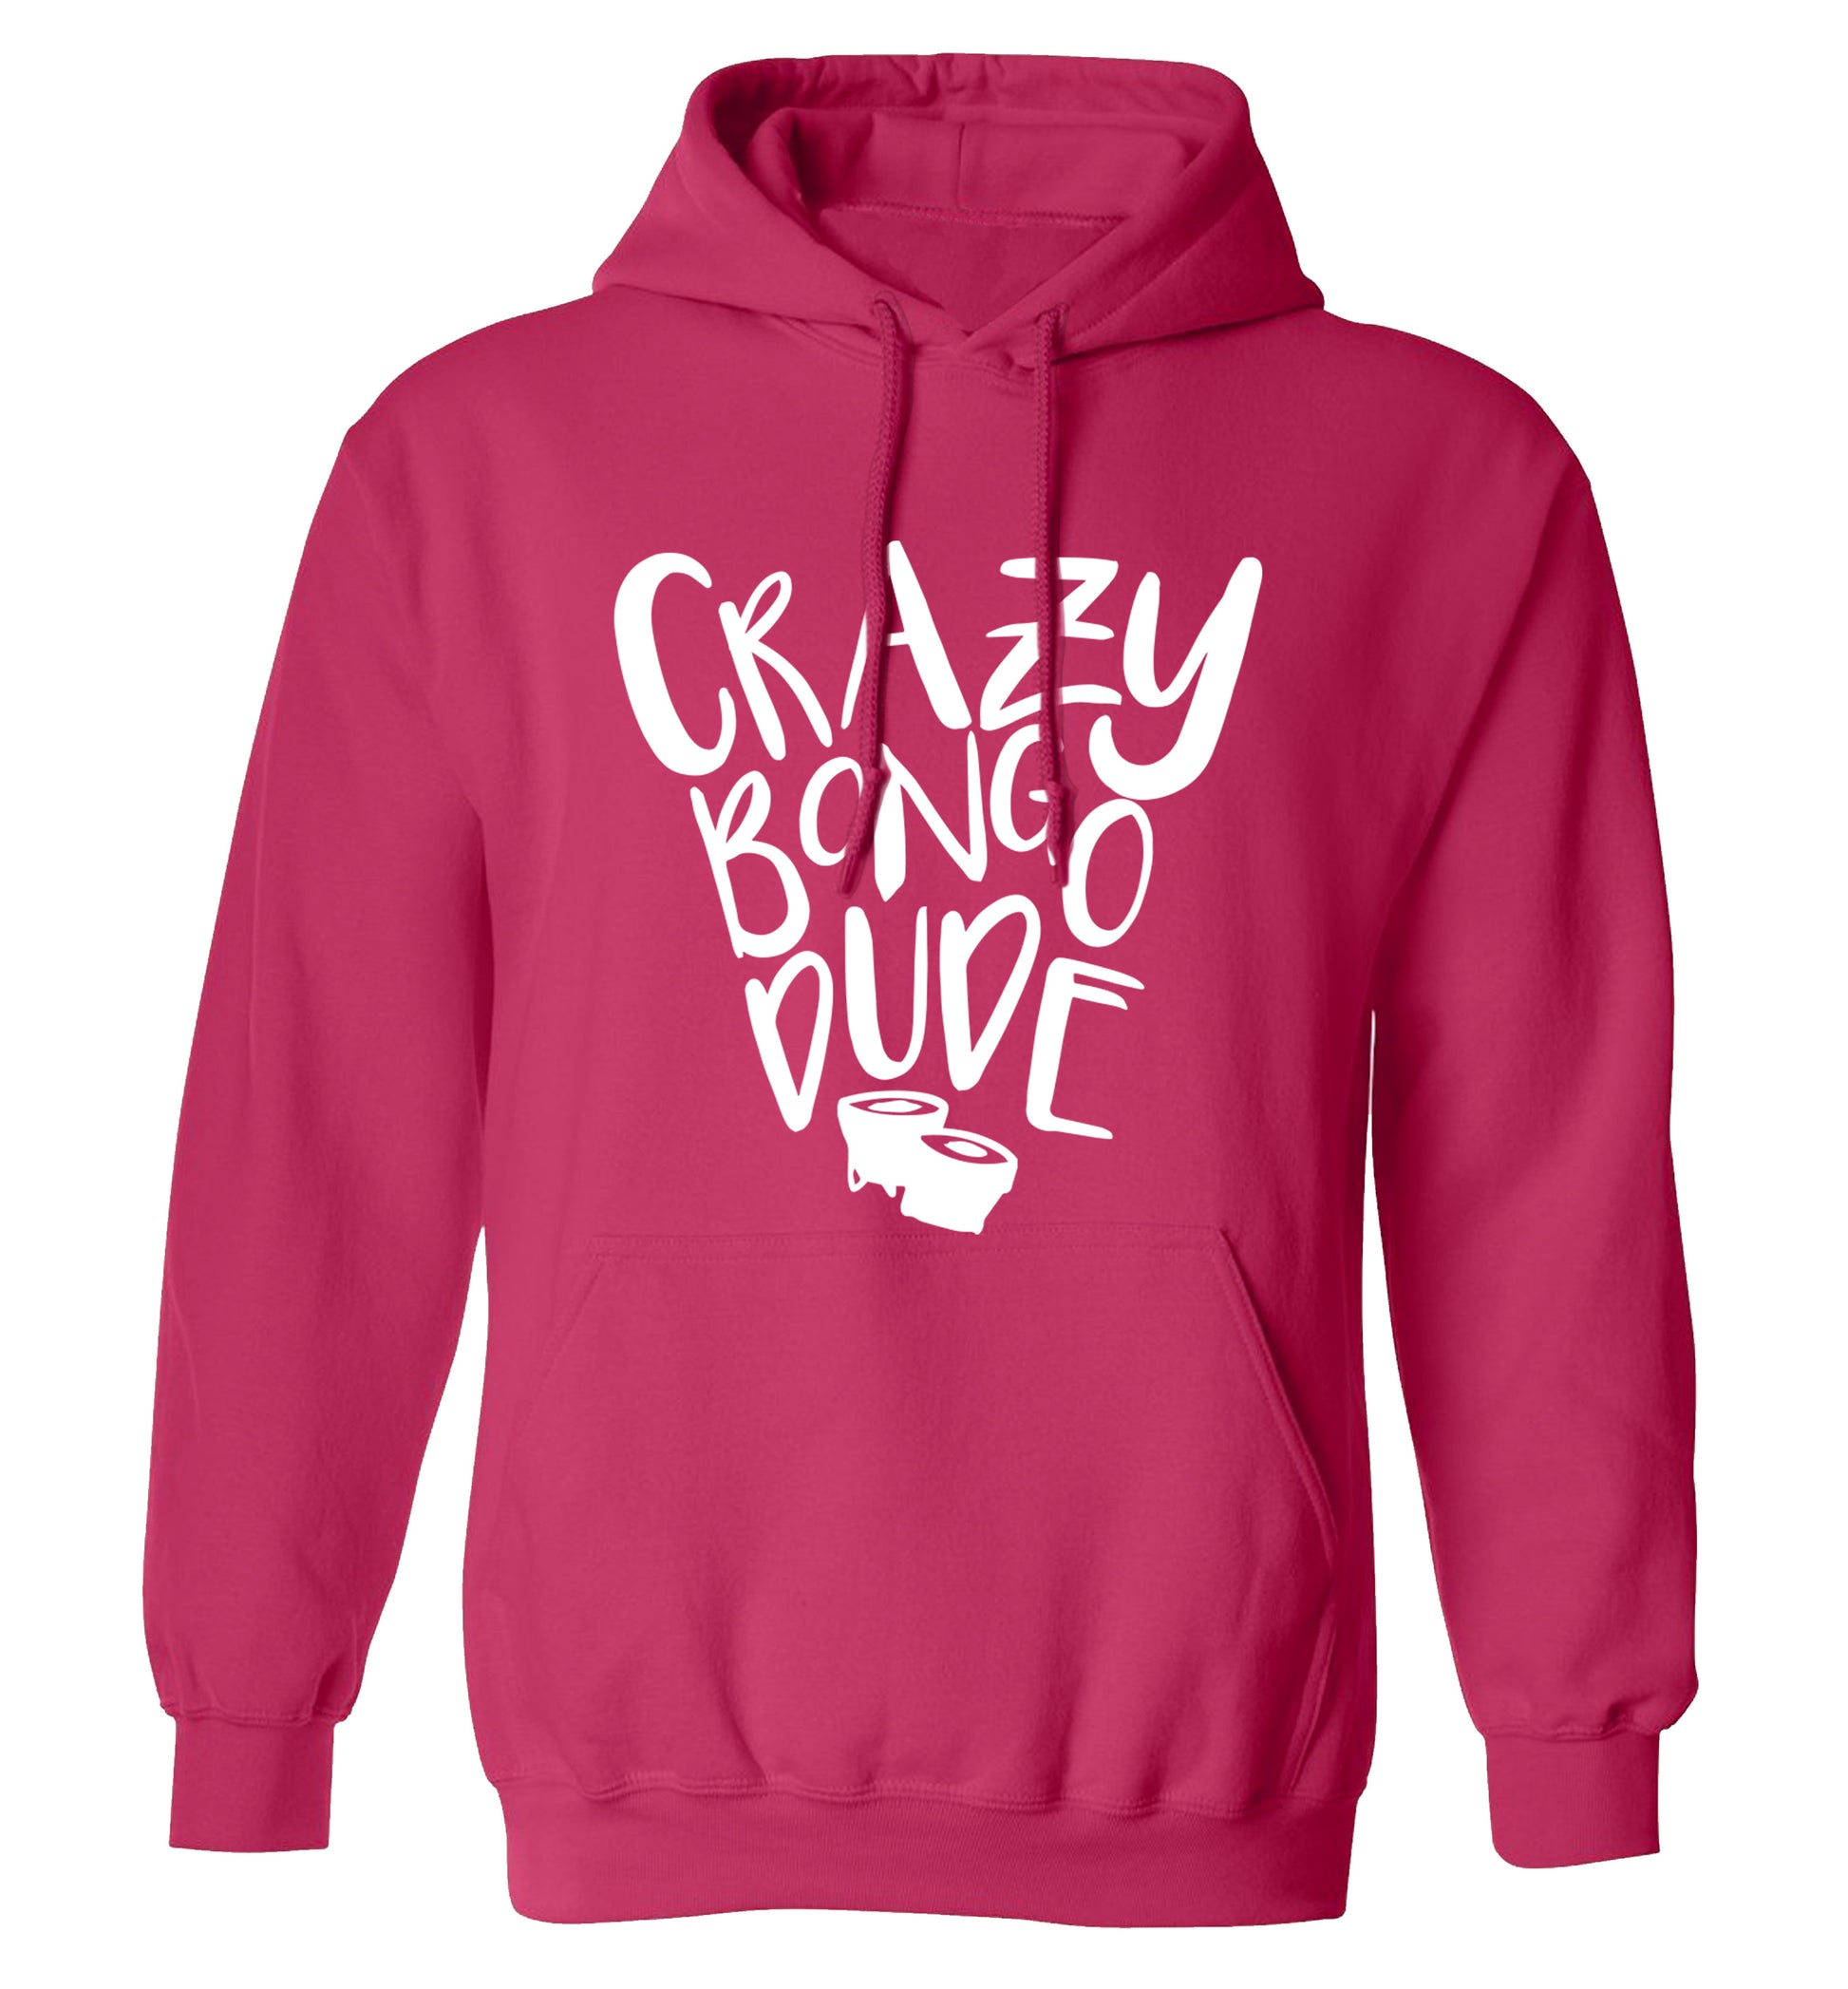 Crazy bongo dude adults unisex pink hoodie 2XL